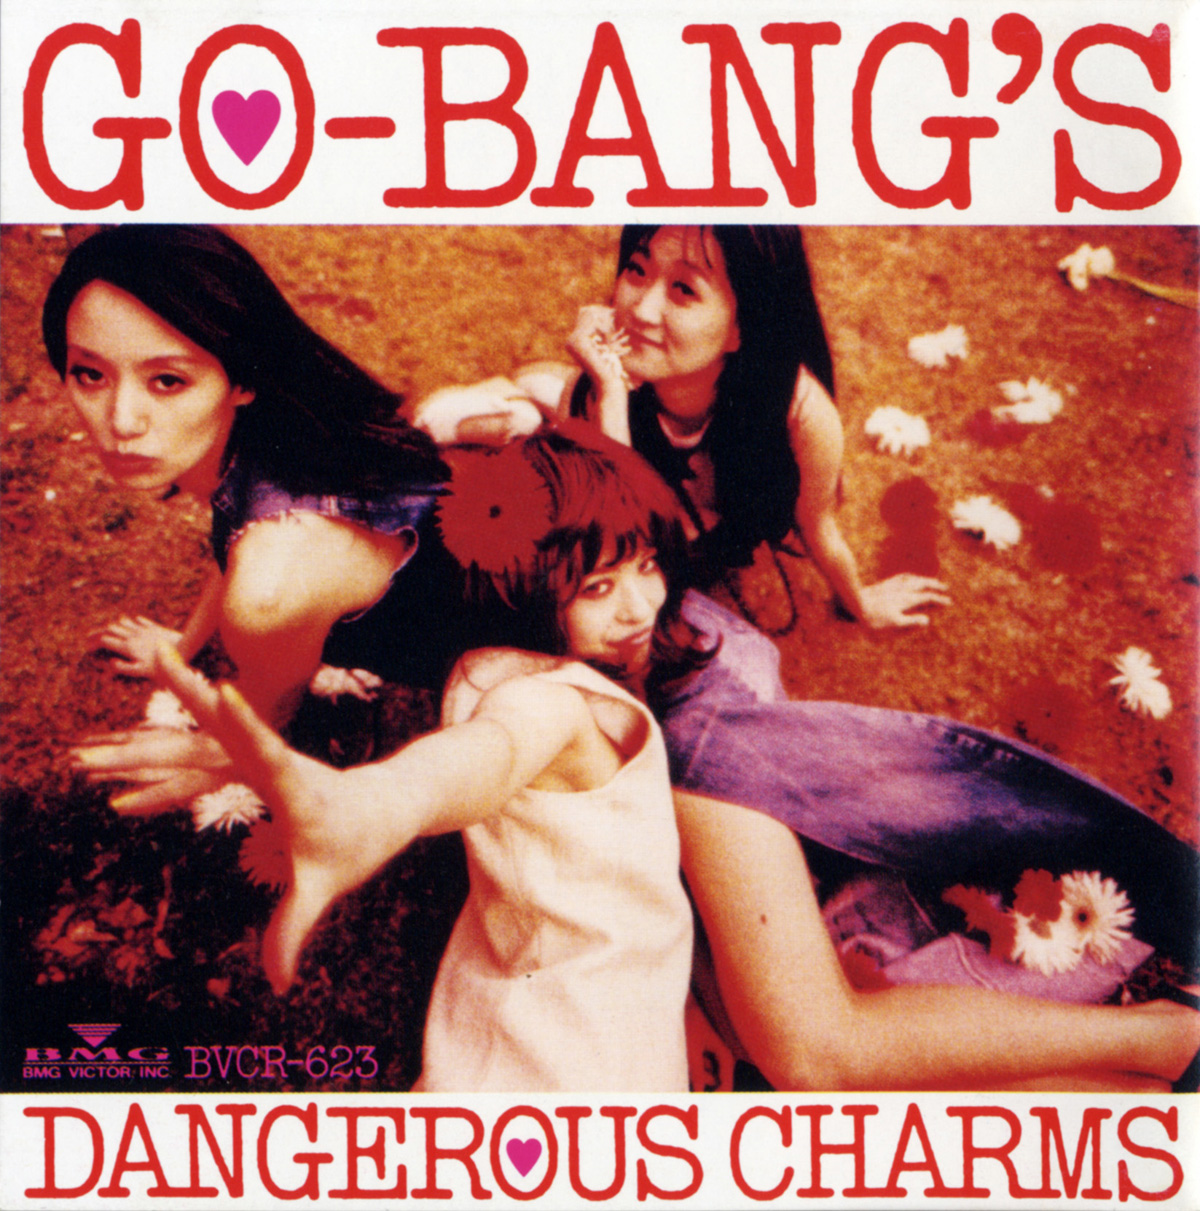 Go-Bang’s “Dangerous Charms”